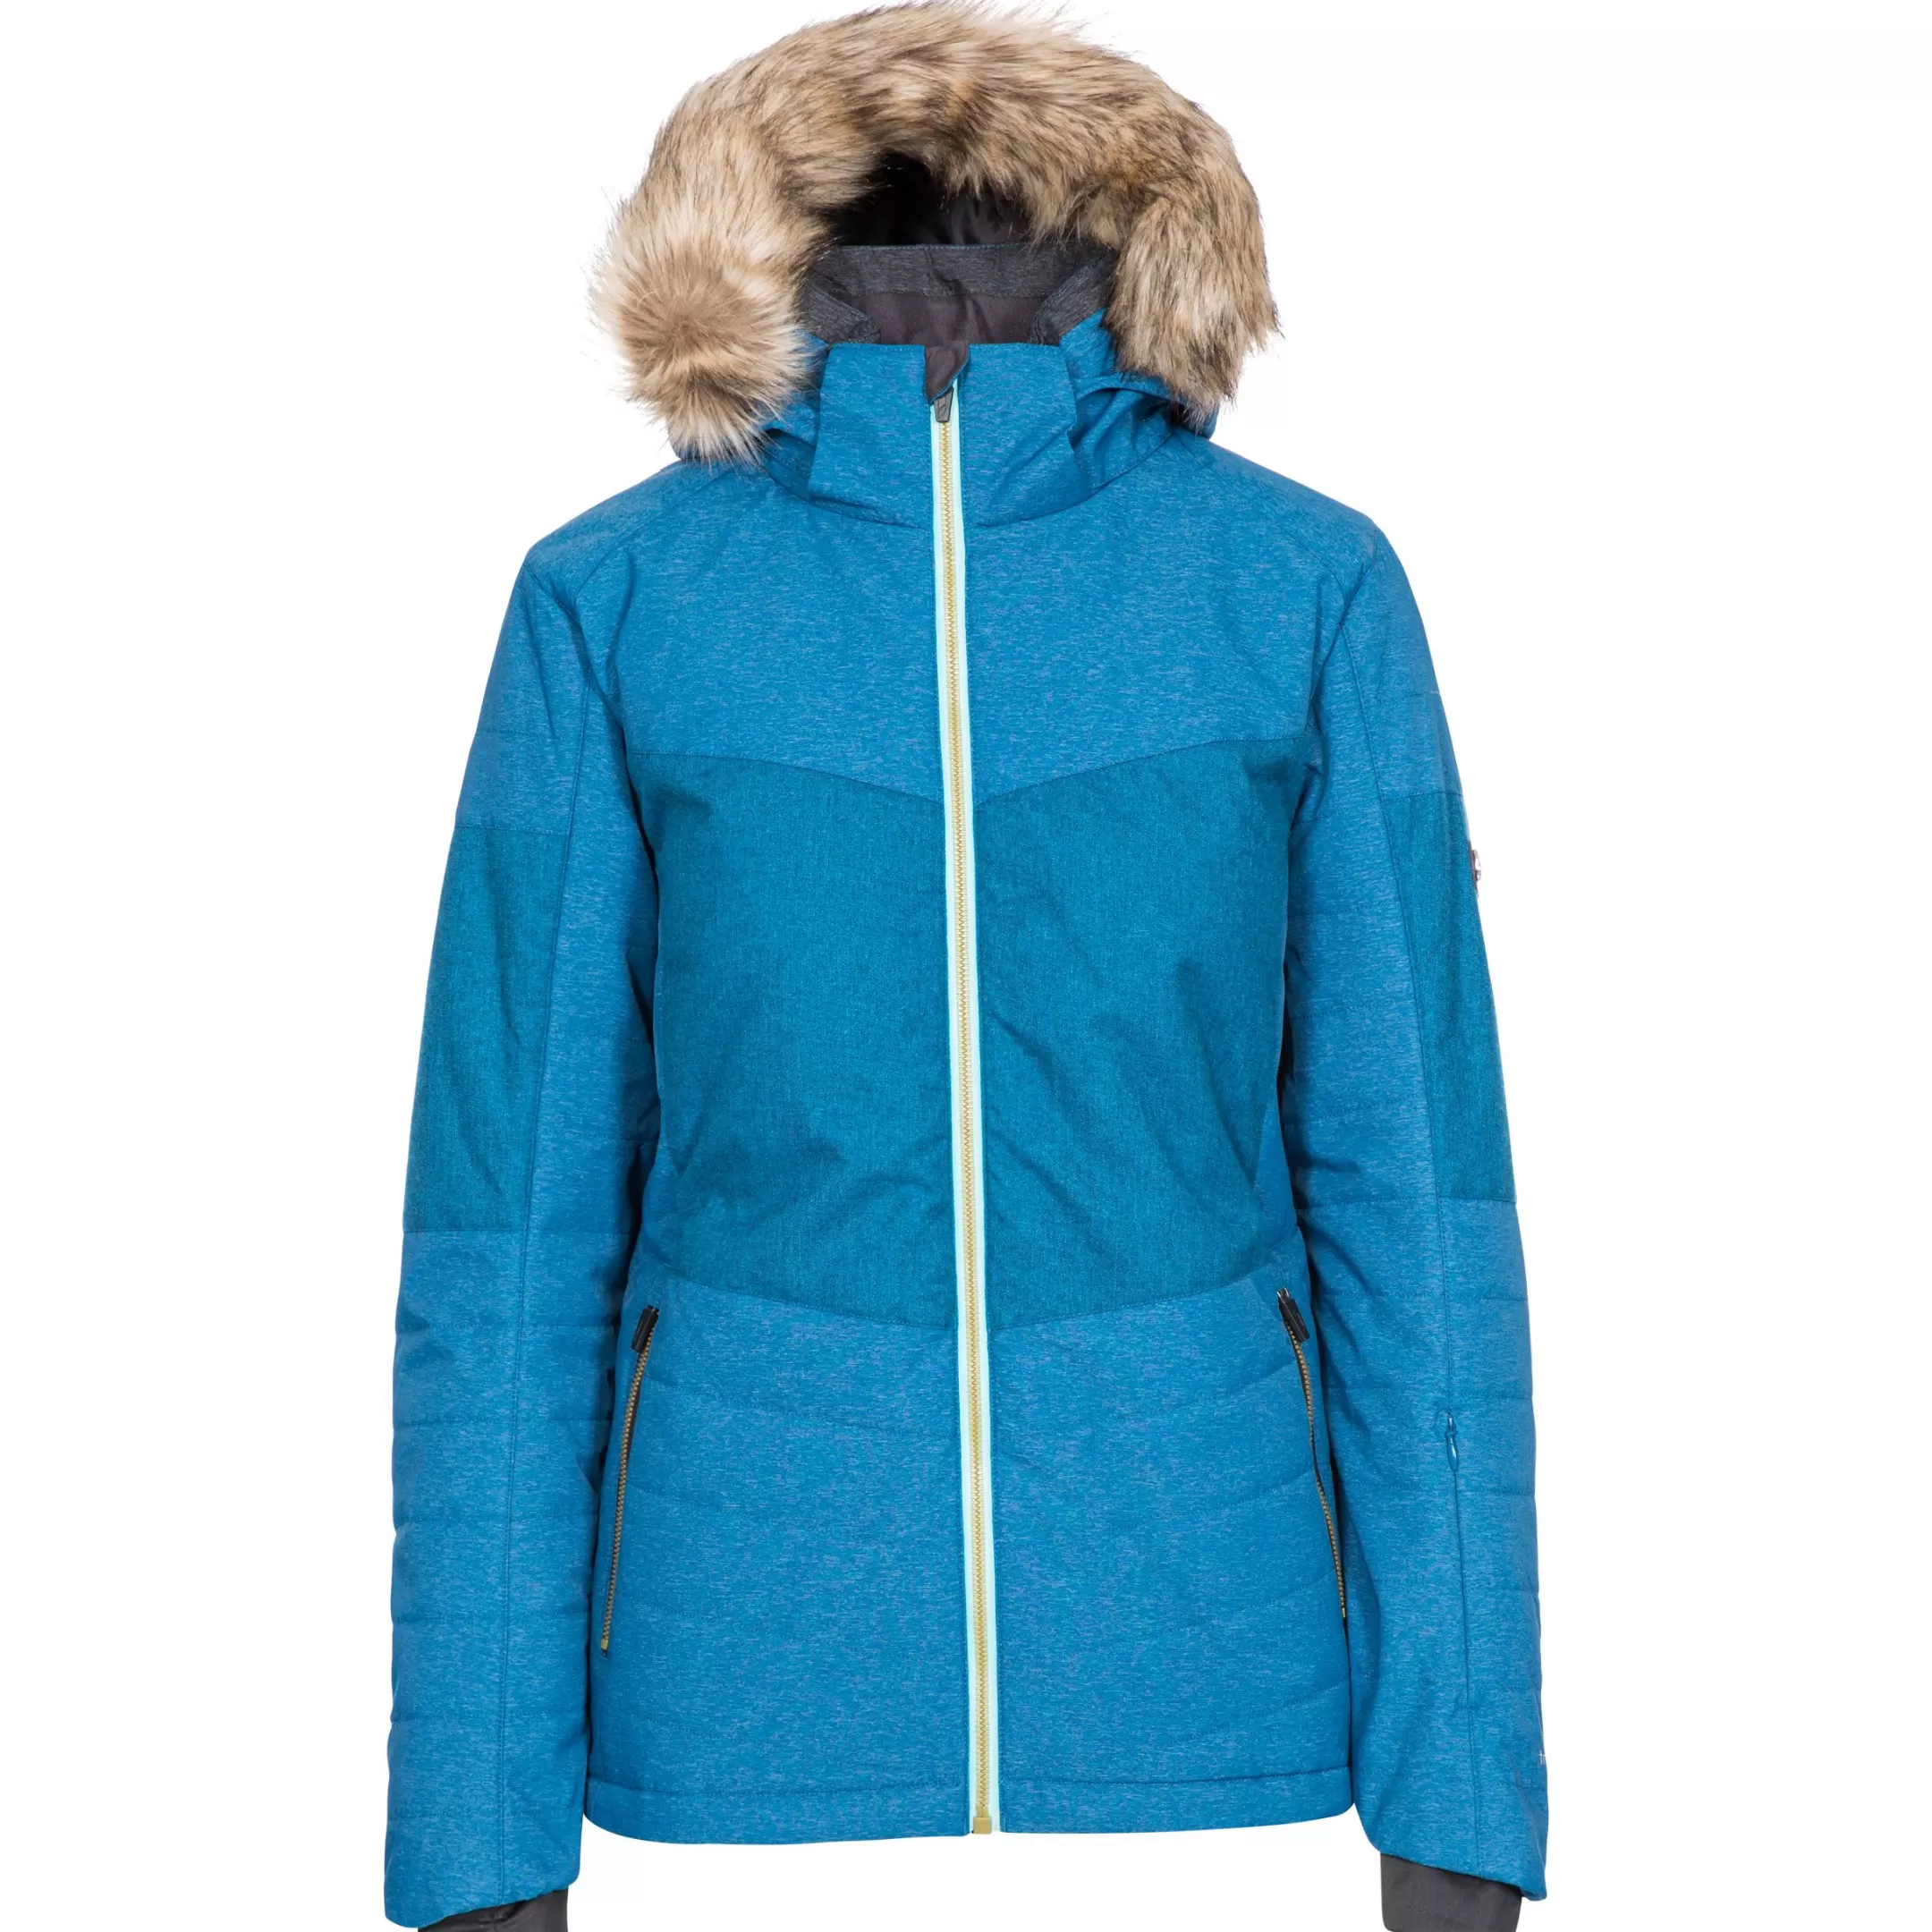 Womens Ski Jacket Tiffany | Trespass Outlet